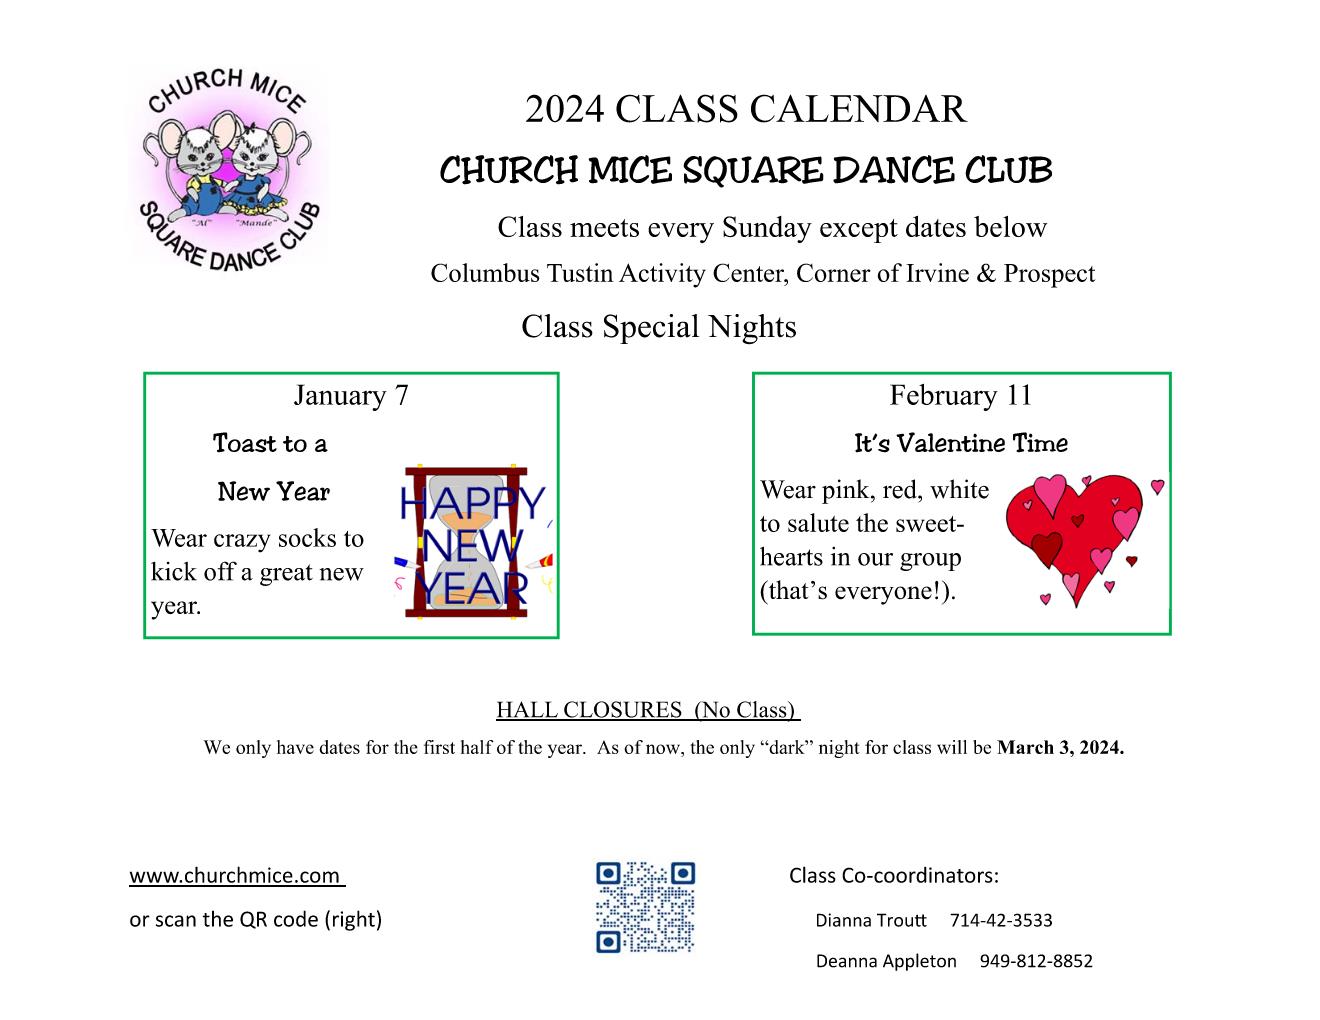 Class special events calendar Jan-Feb24